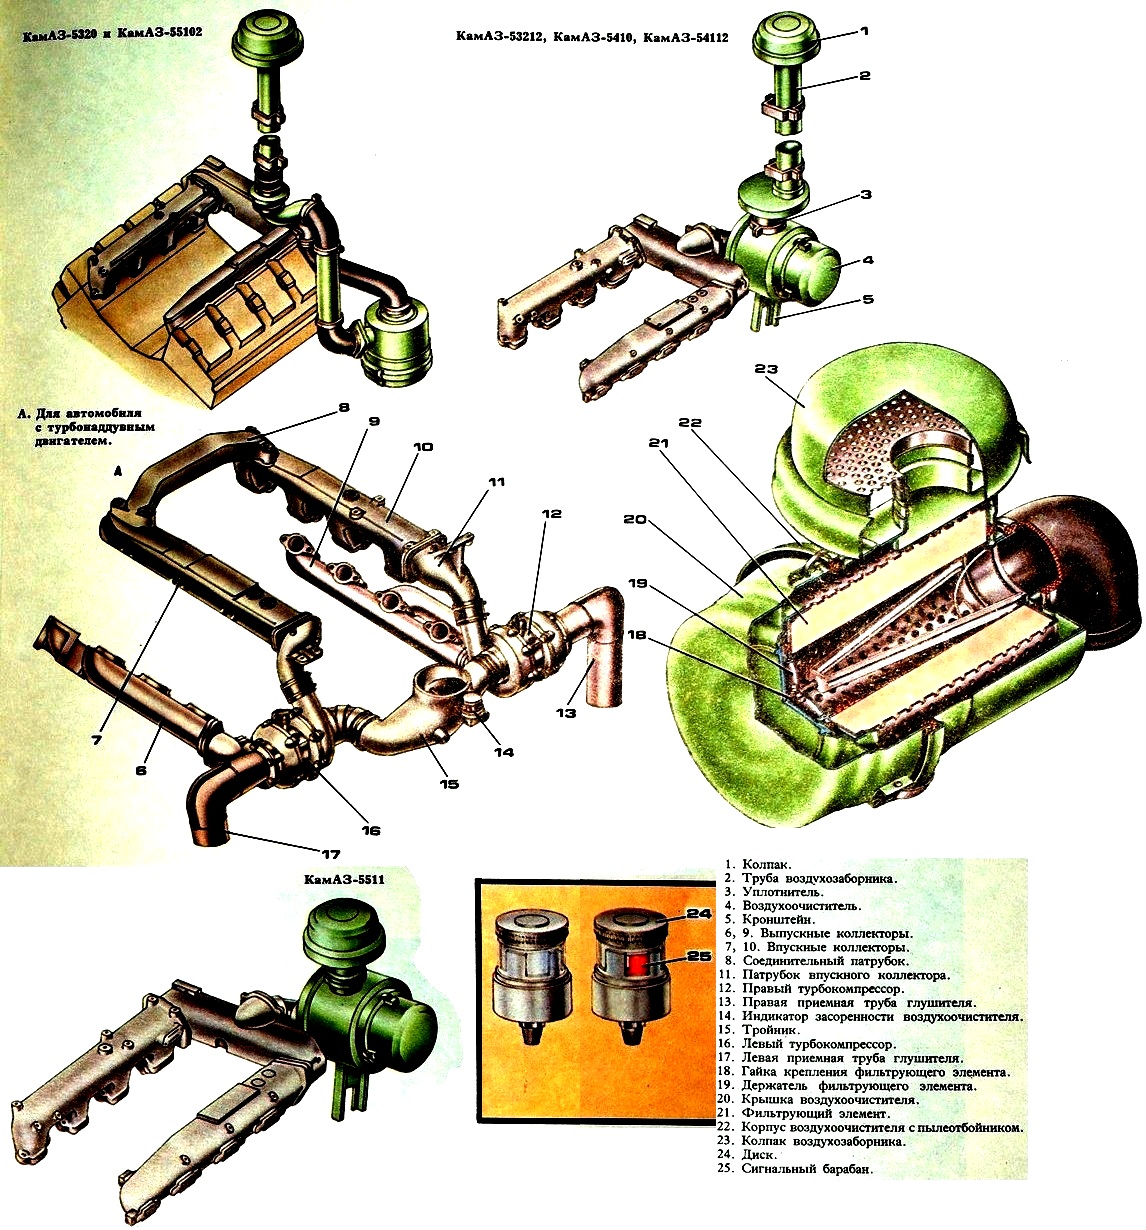 Kamaz engine air supply system